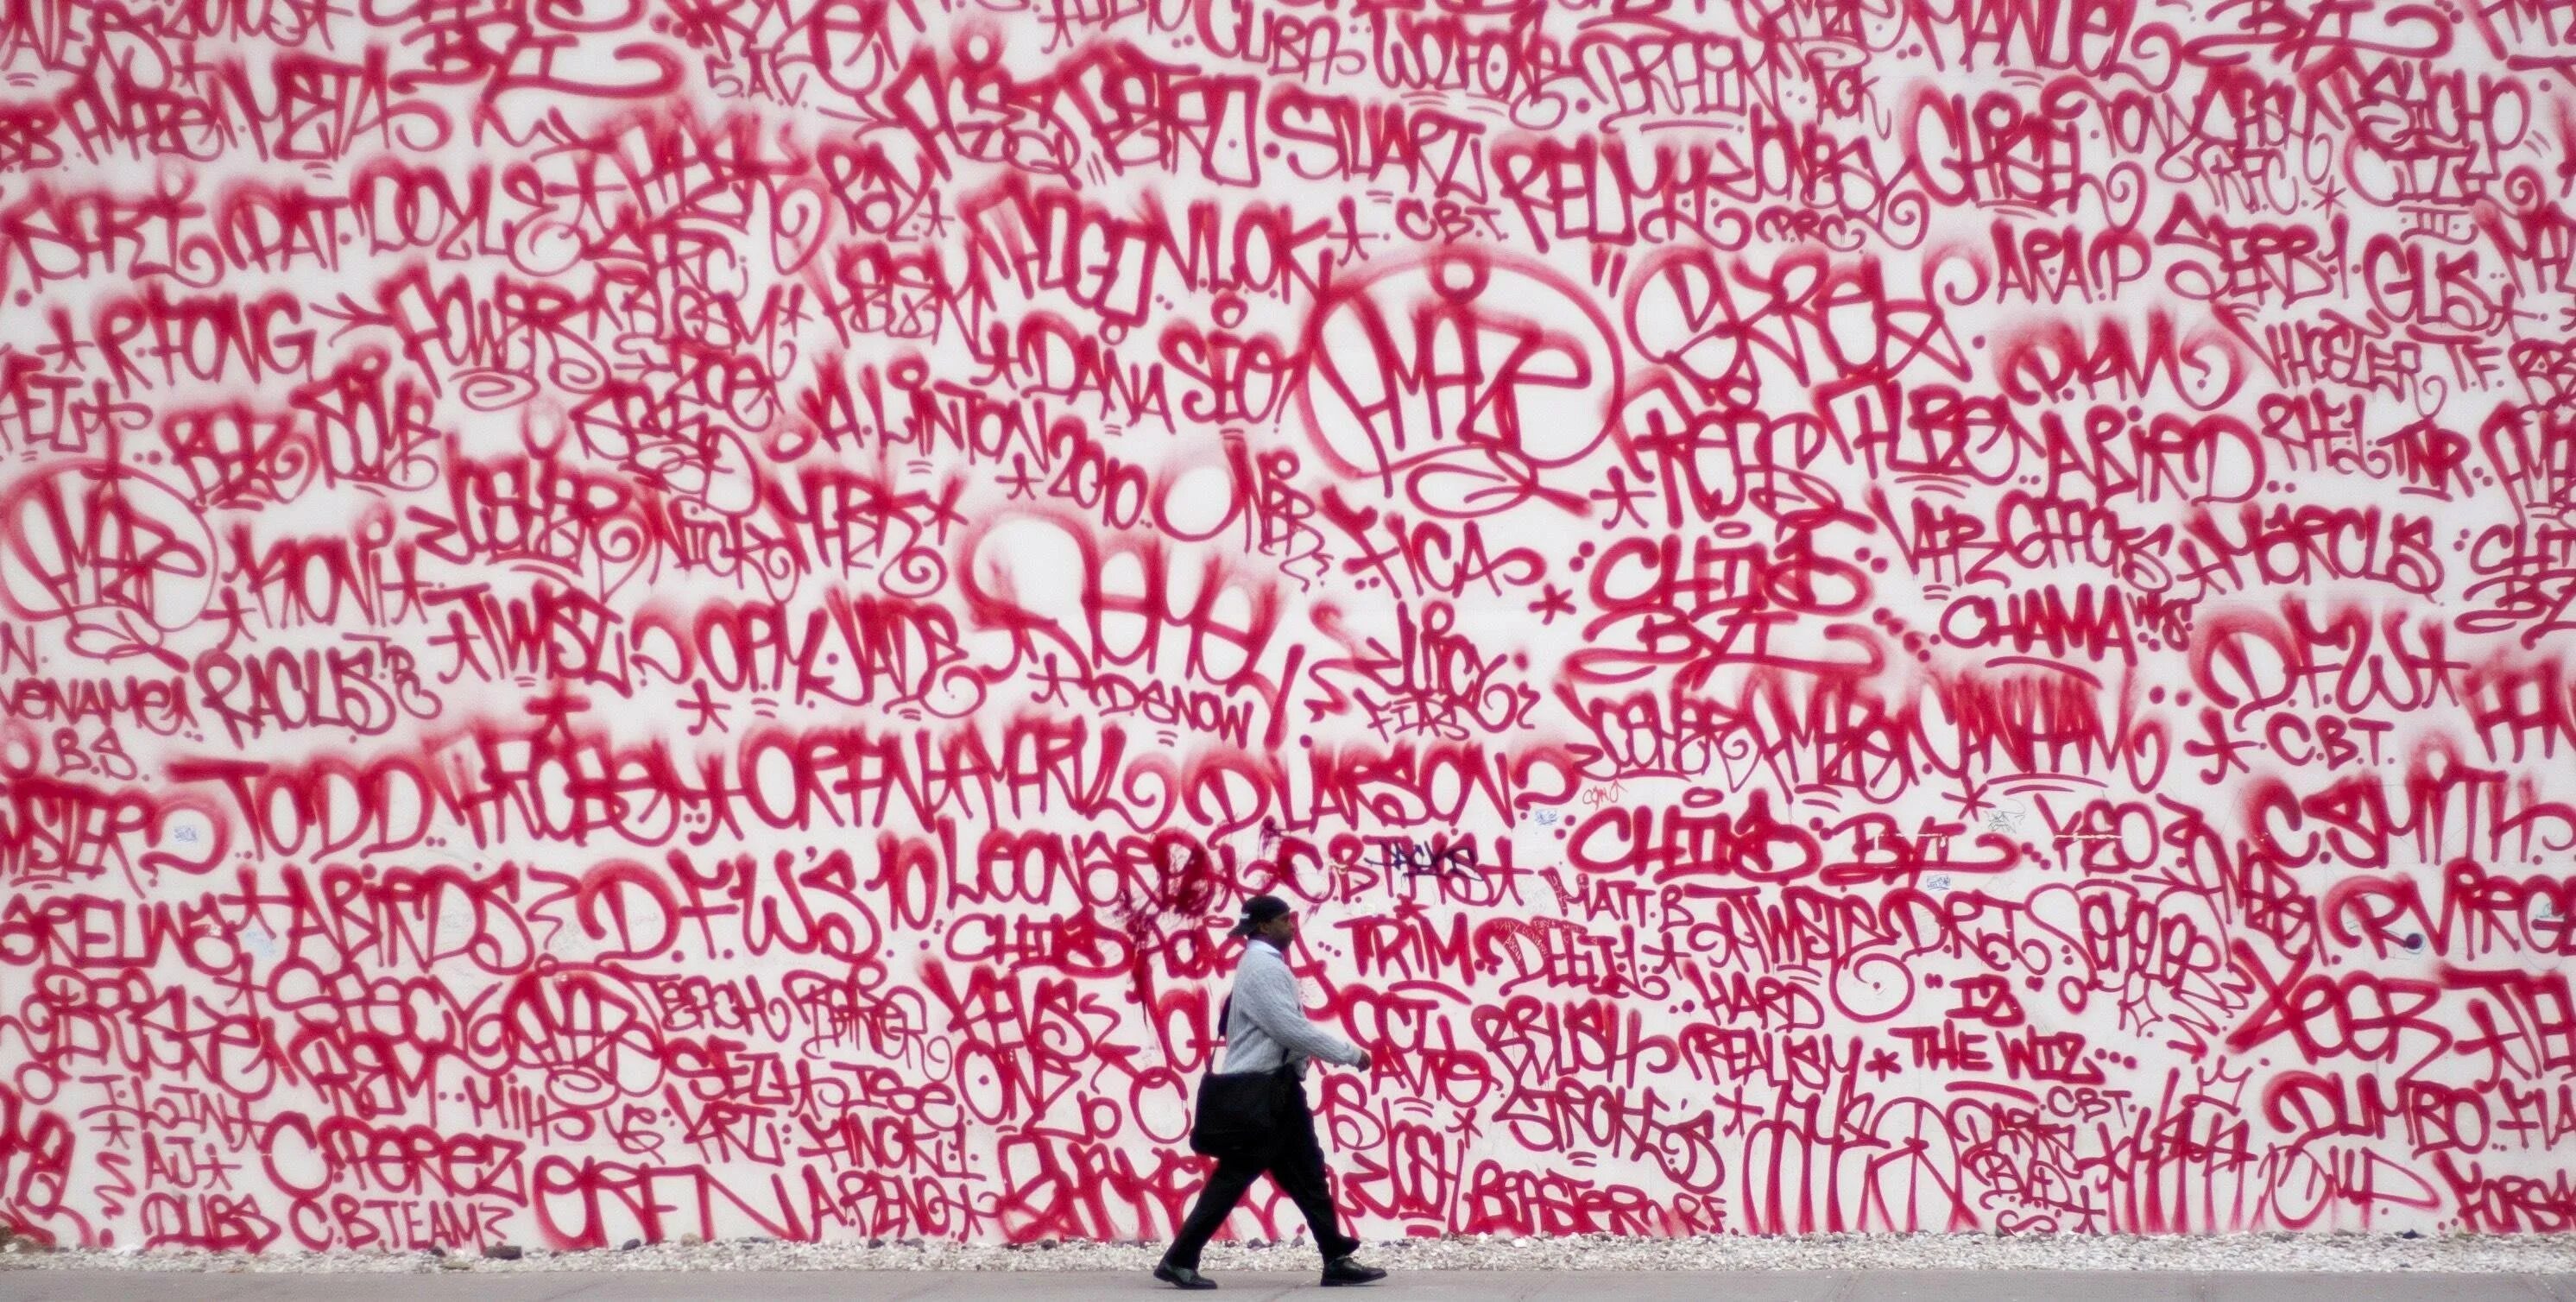 Много тегов. Теги граффити. Теги на стенах. Теги граффити на стенах. Самые популярные граффити.